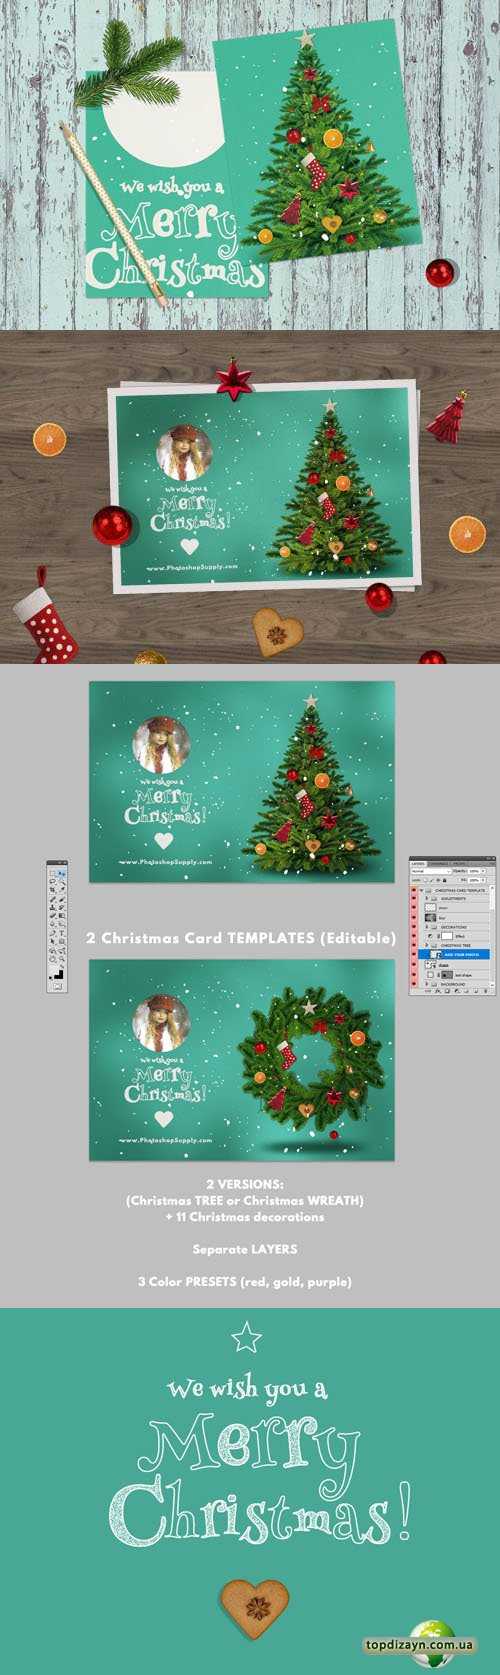 Christmas Card Psd Templates For Photoshop, Разные Шаблоны Throughout Christmas Photo Card Templates Photoshop